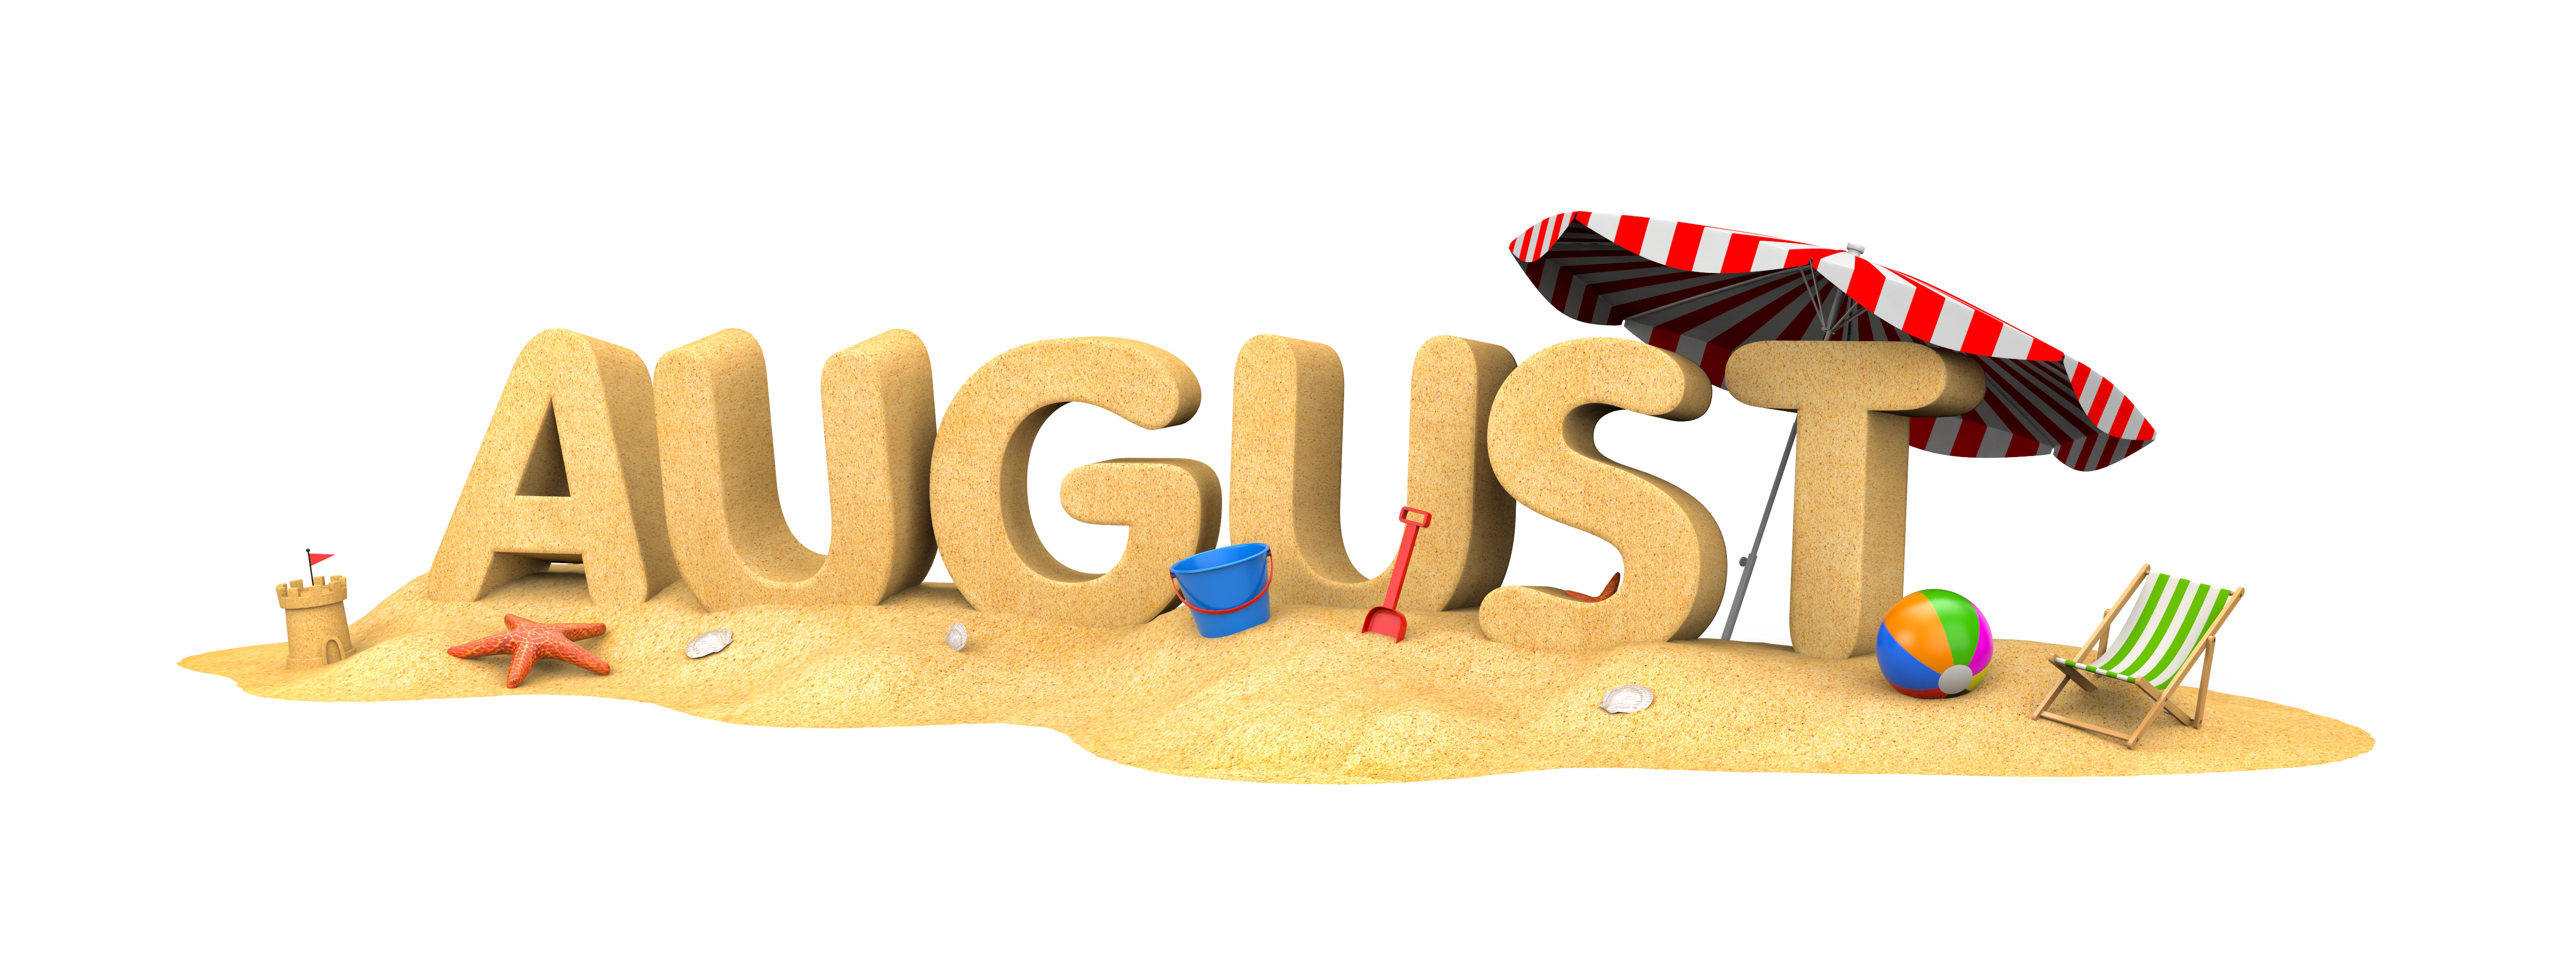 August logo in a beach scene